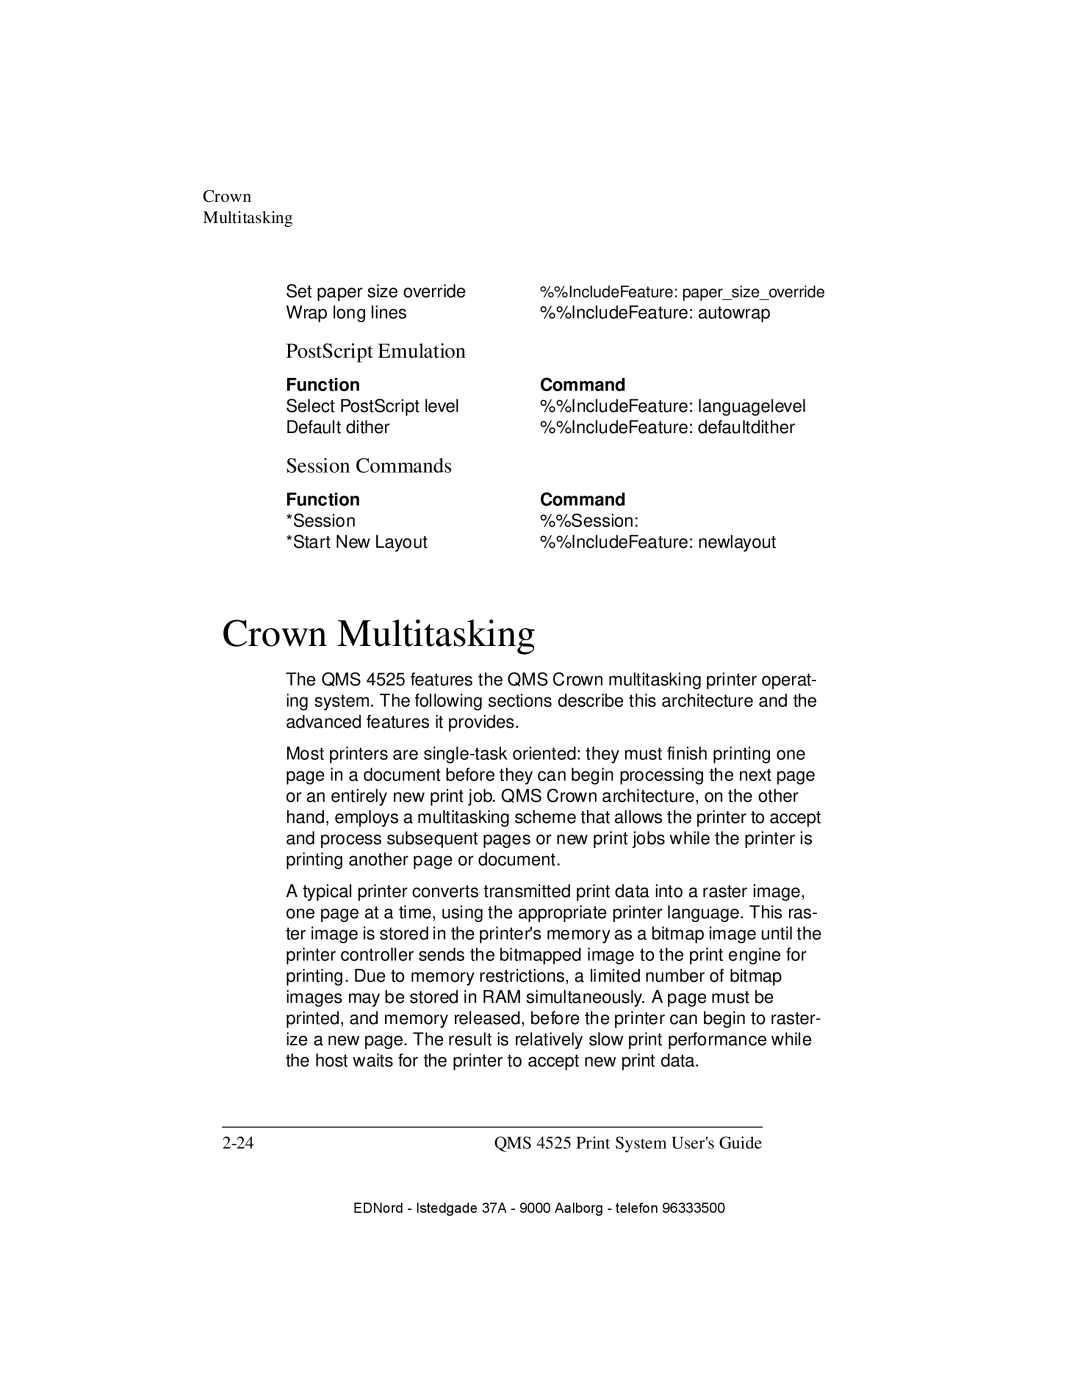 IBM QMS 4525 manual Crown Multitasking, PostScript Emulation, Session Commands 